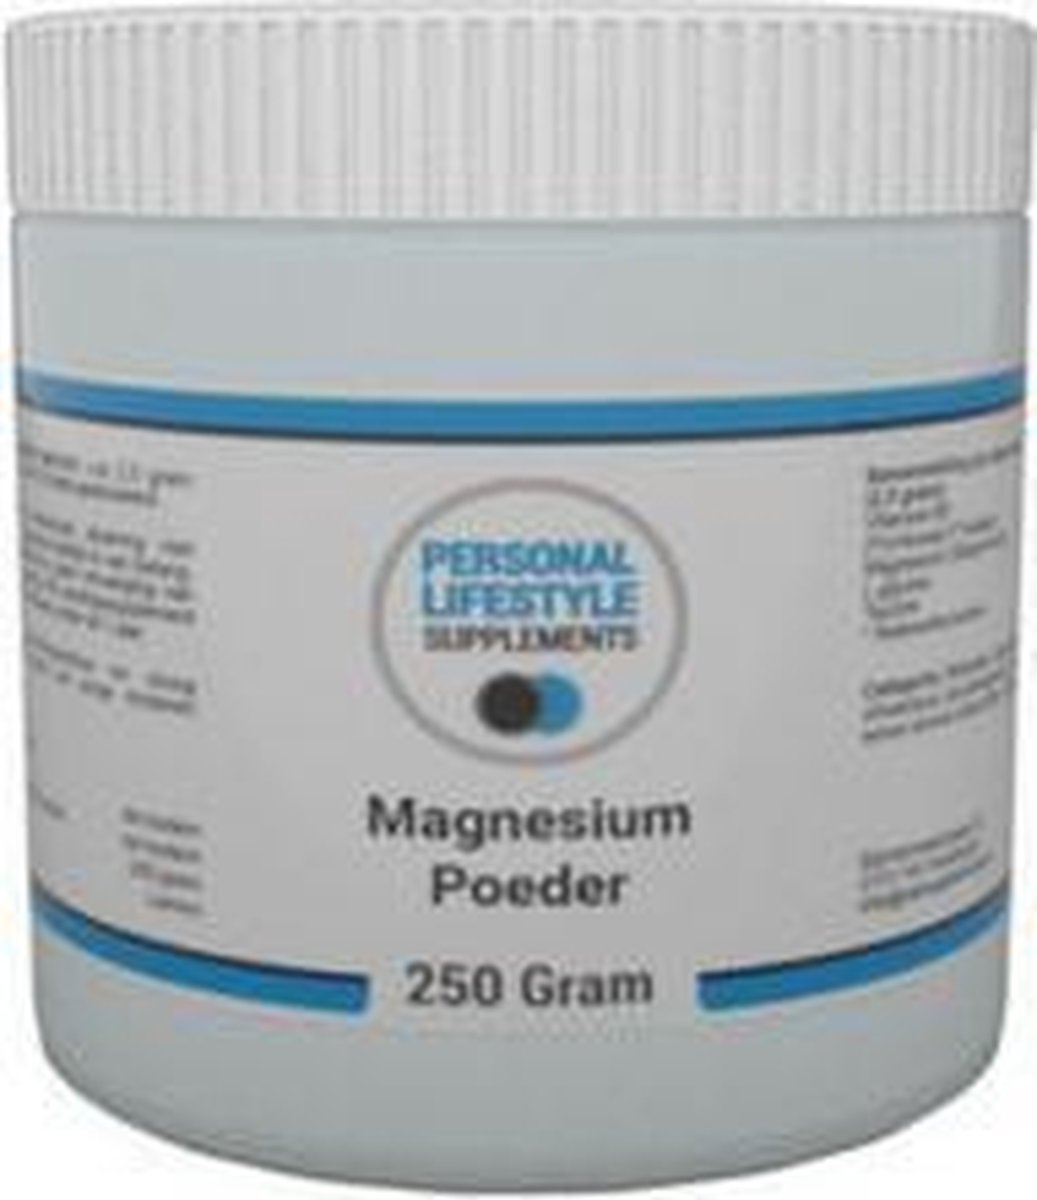 Magnesium poeder - Personal Lifestyle Gym